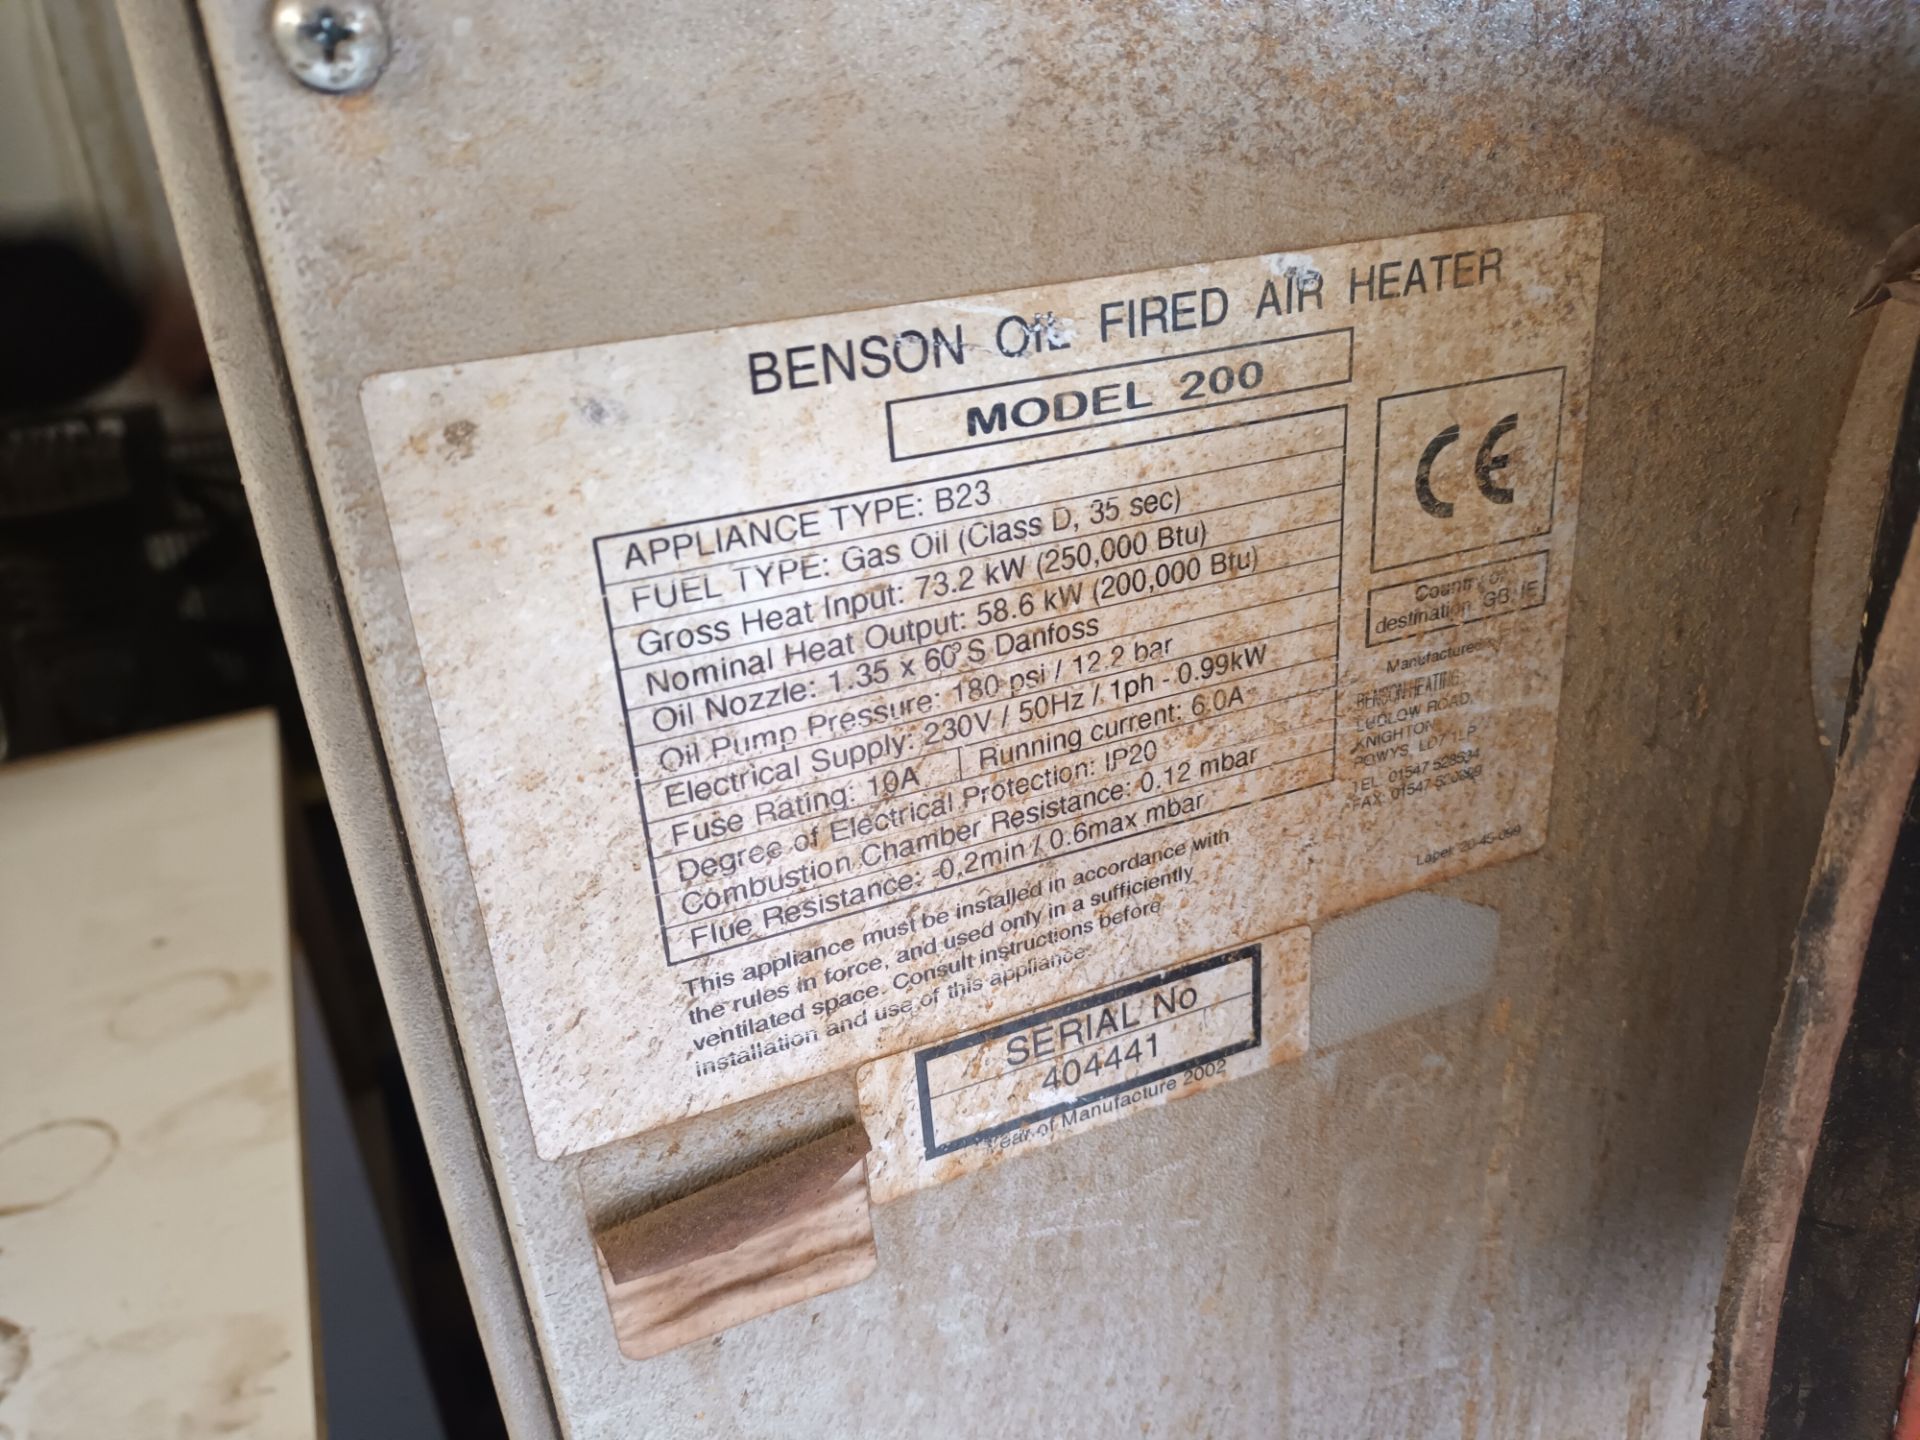 Benson oil fired air heater, model 200, type B23 - Image 2 of 3